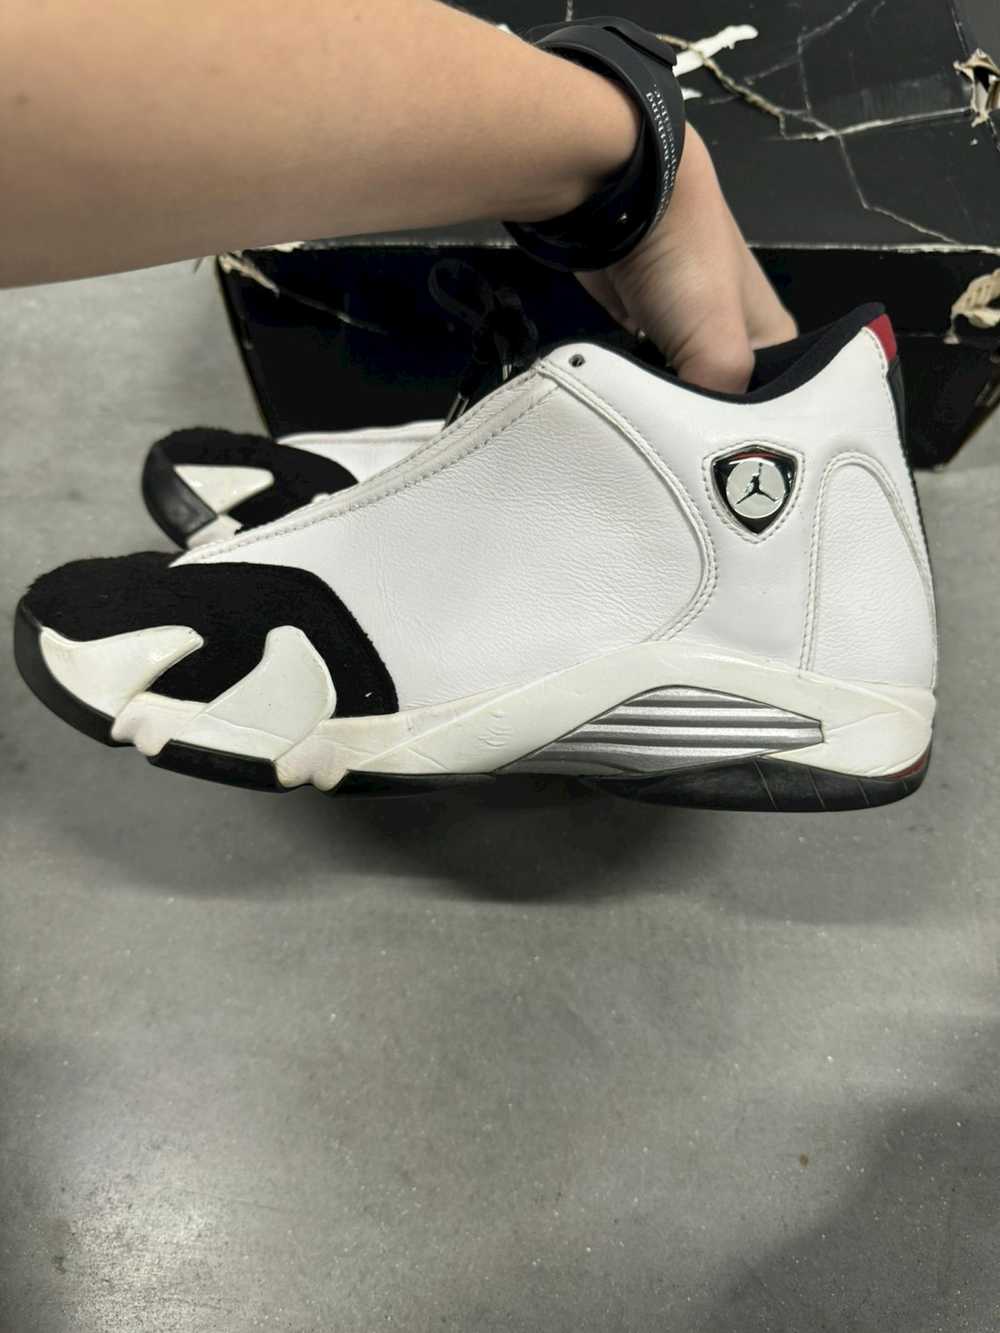 Jordan Brand Used Jordan 14 “Black Toe” 2014 - image 7